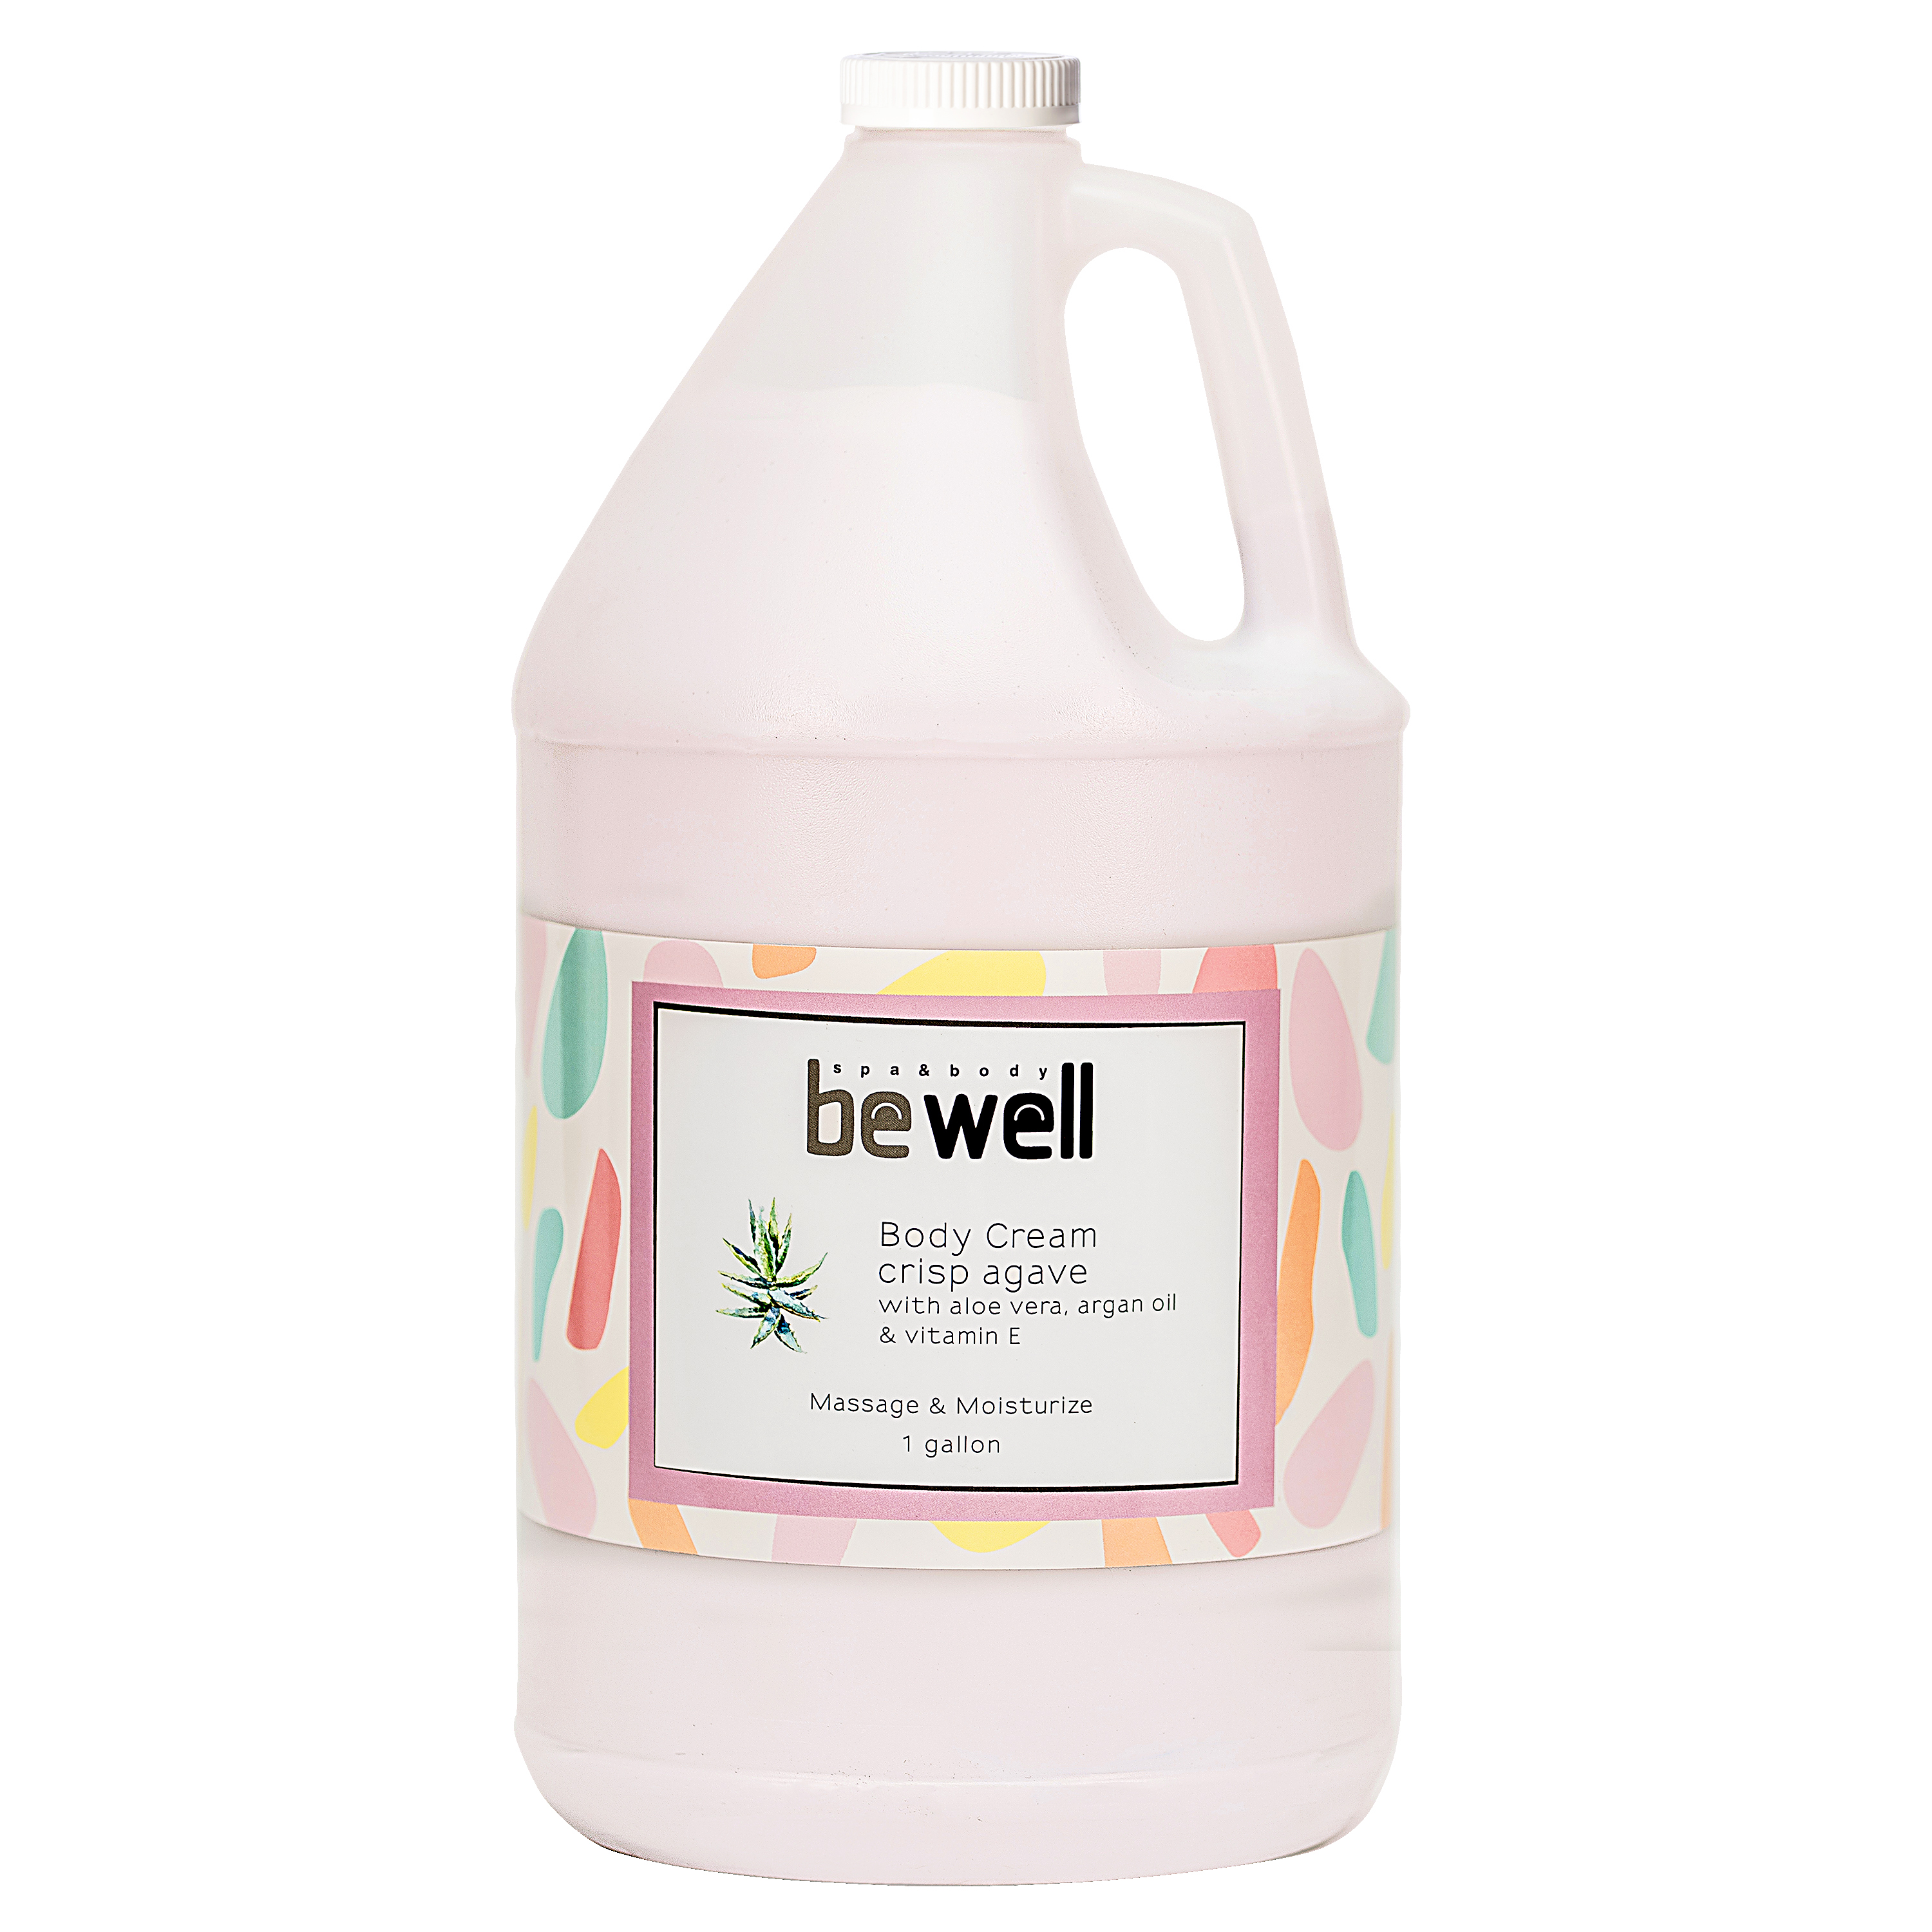 BEWELL Body Cream - CRISP AGAVE - 1gal.